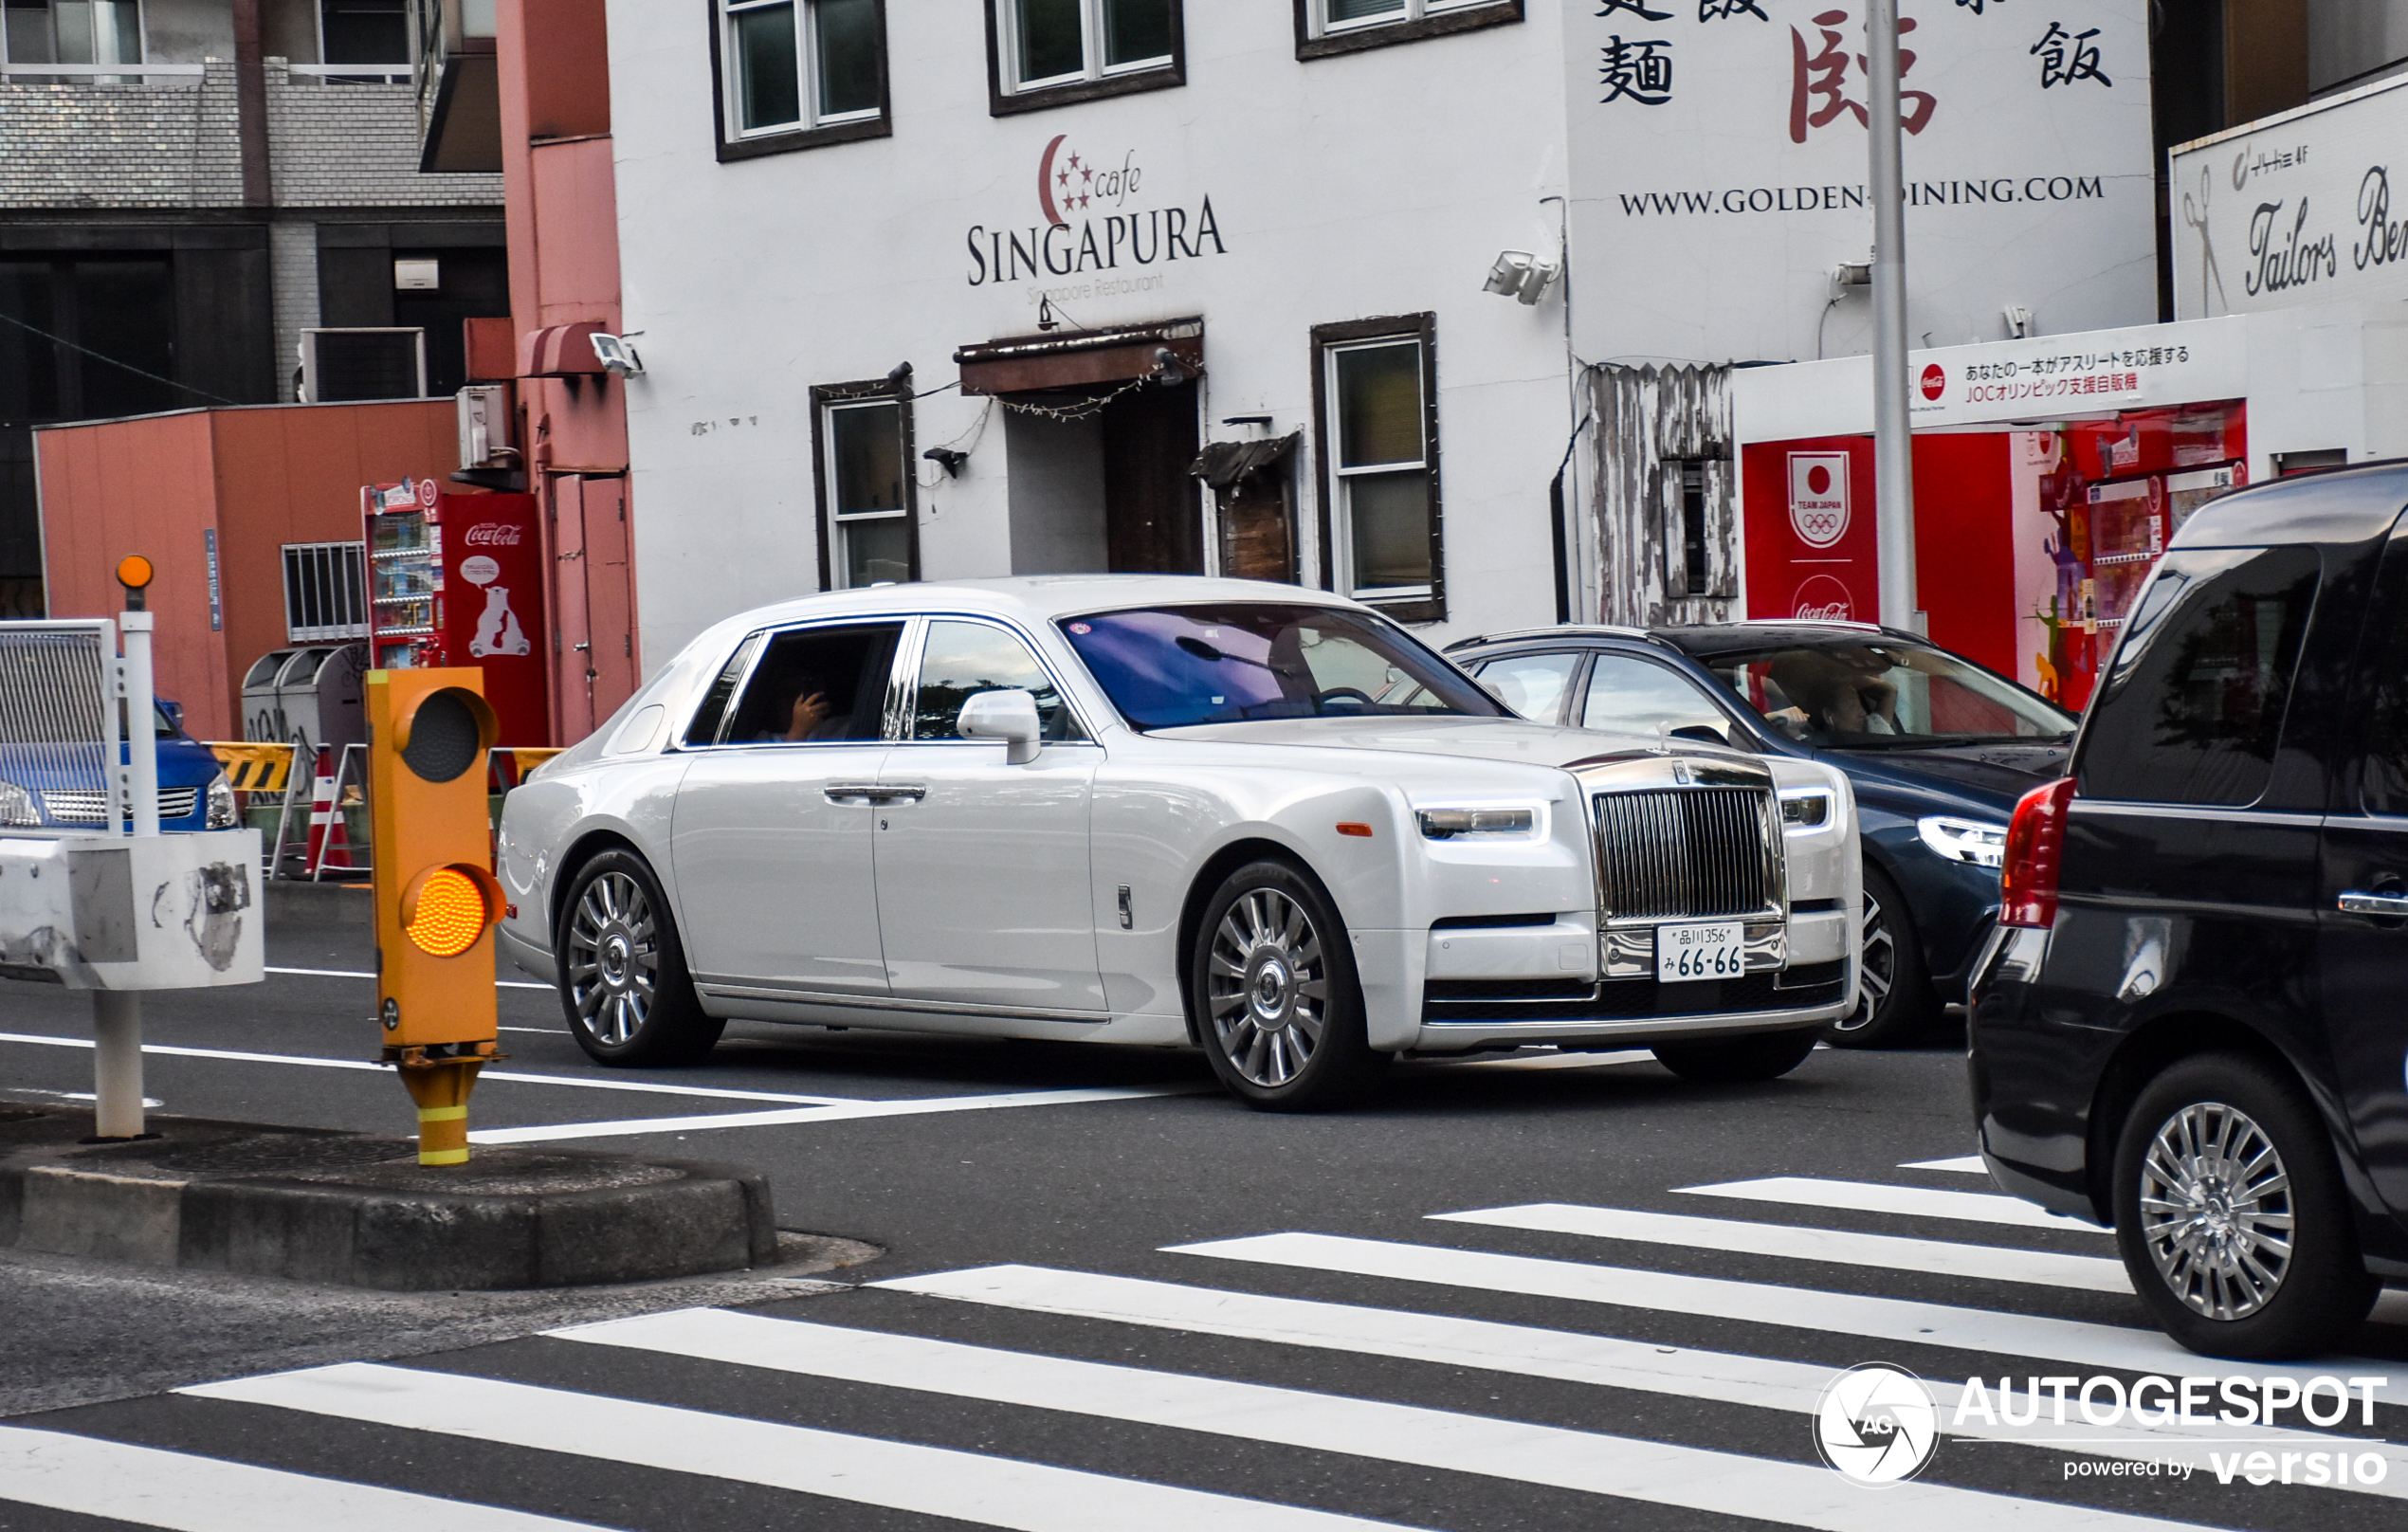 The Radiant White Rolls-Royce Phantom Leaves an Impression